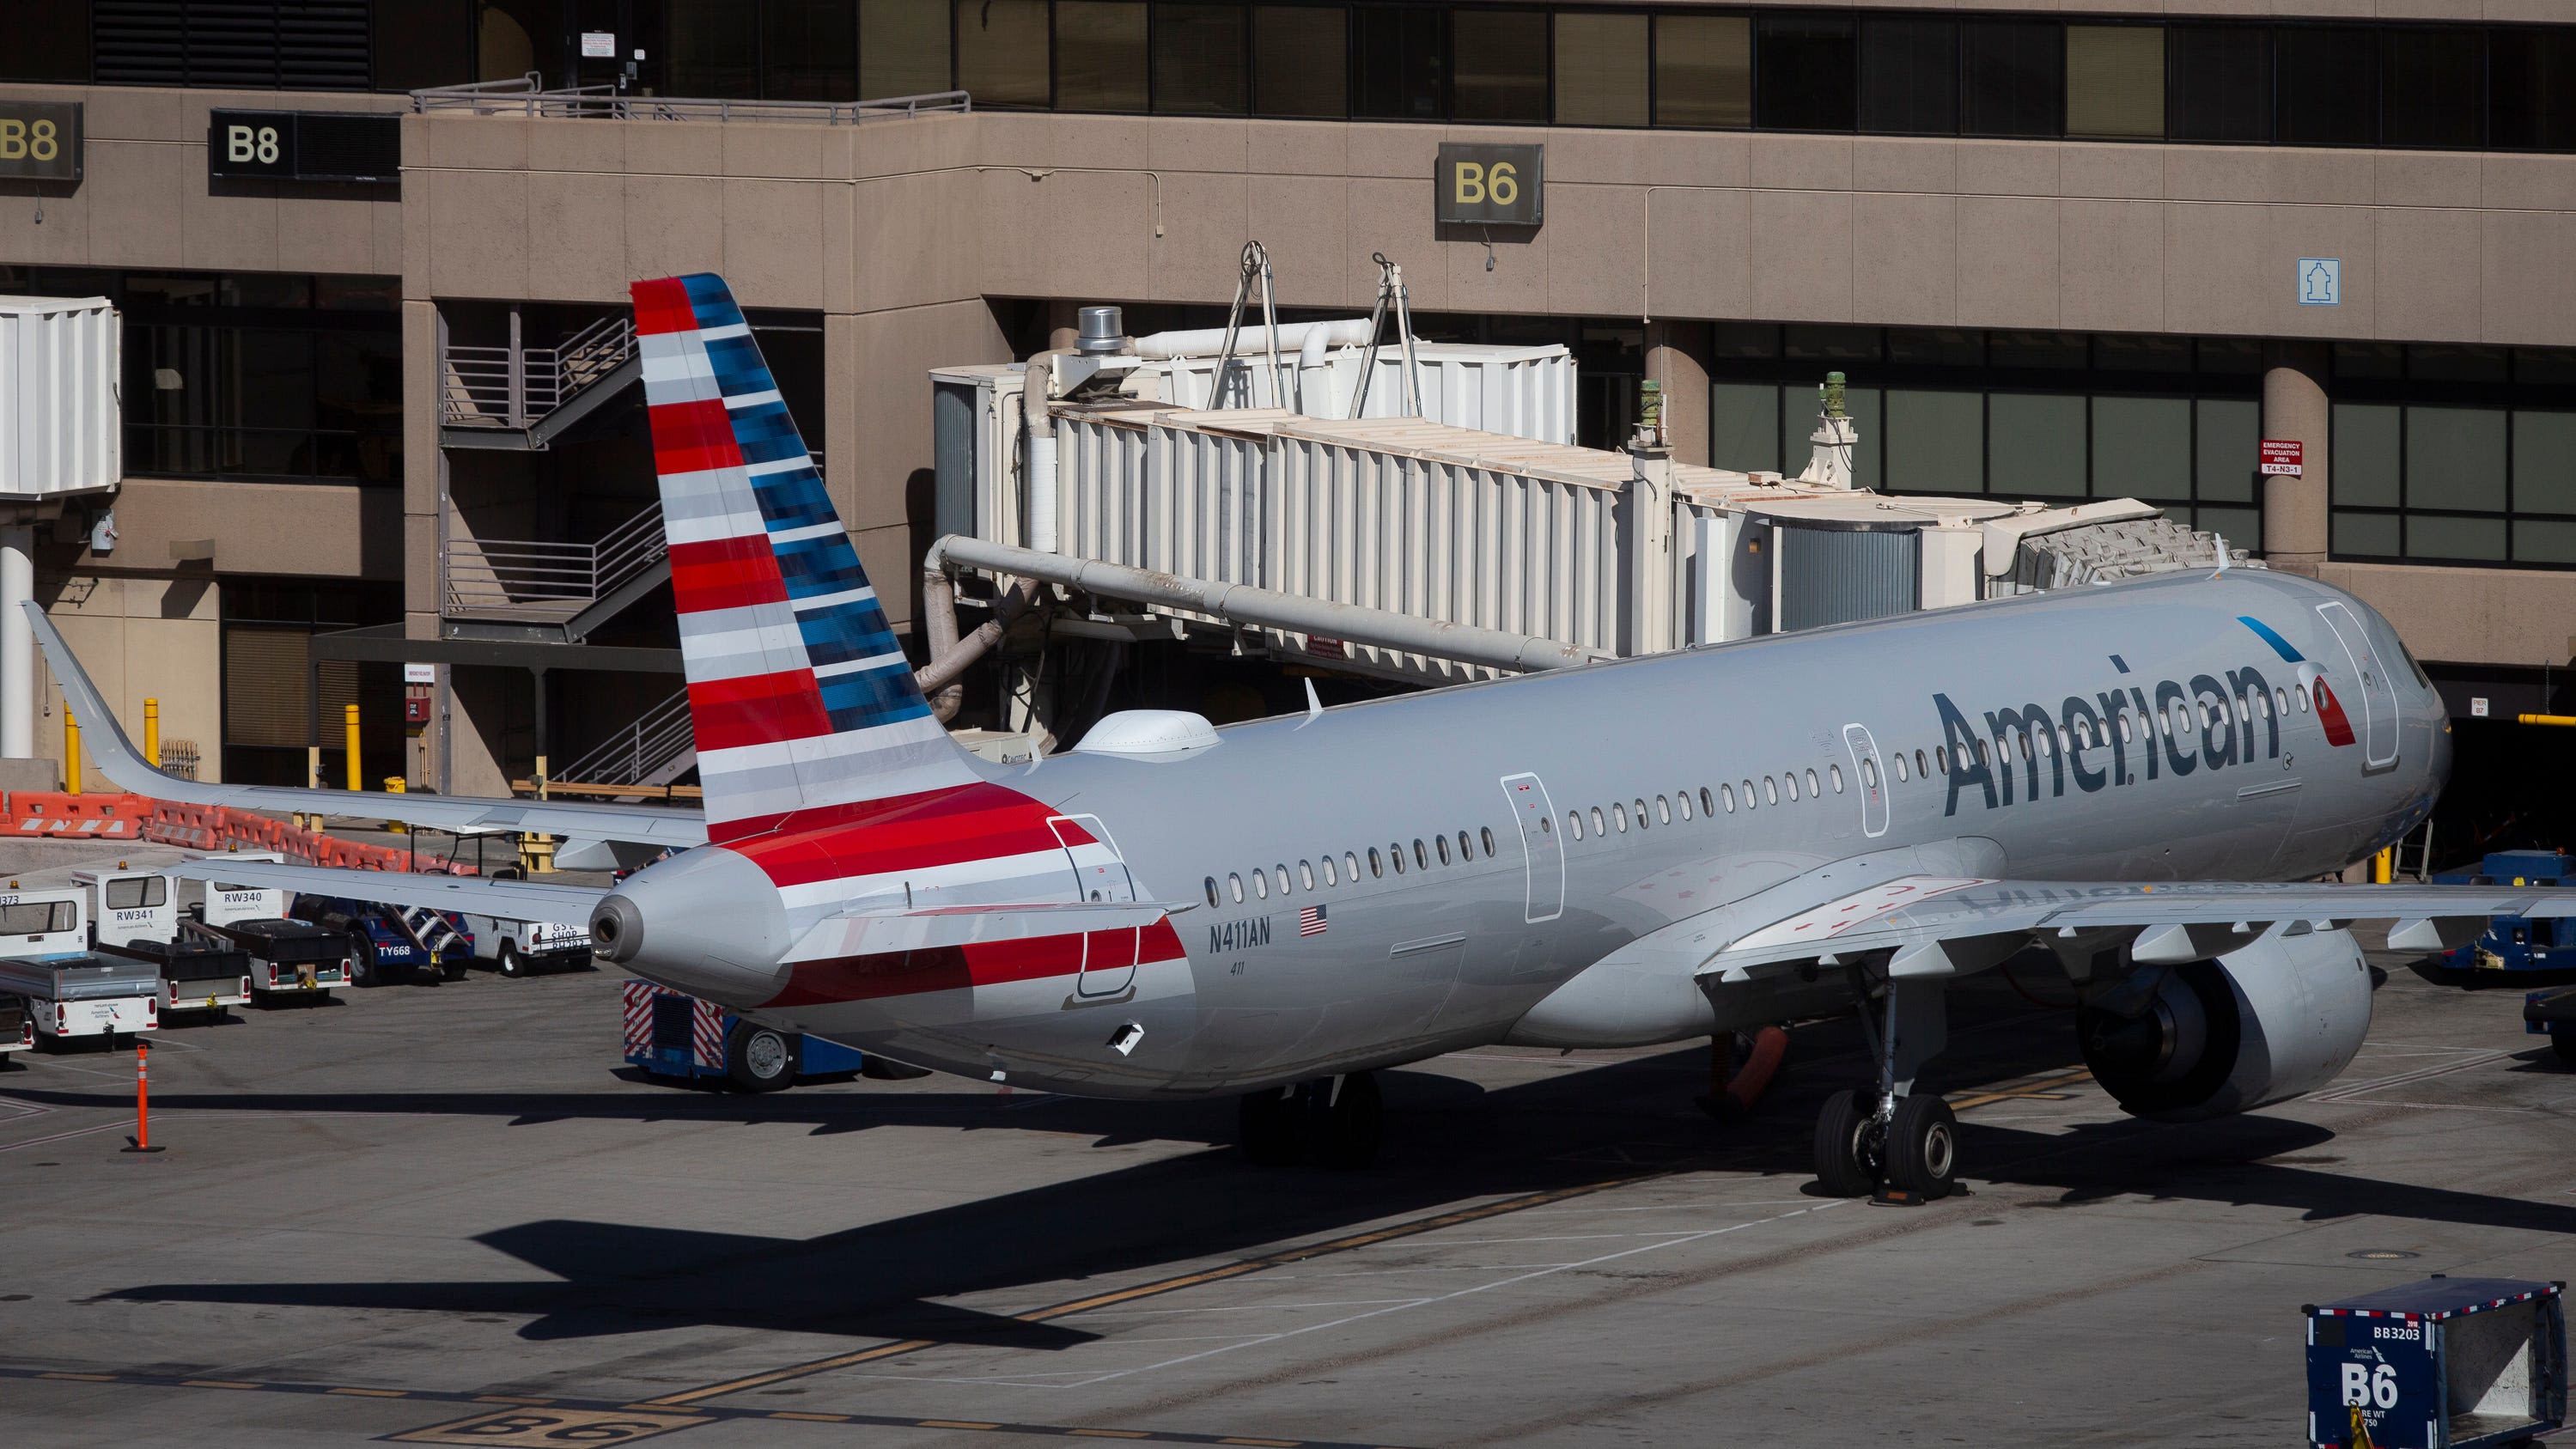 Black men sue American Airlines, alleging racial discrimination on Phoenix flight